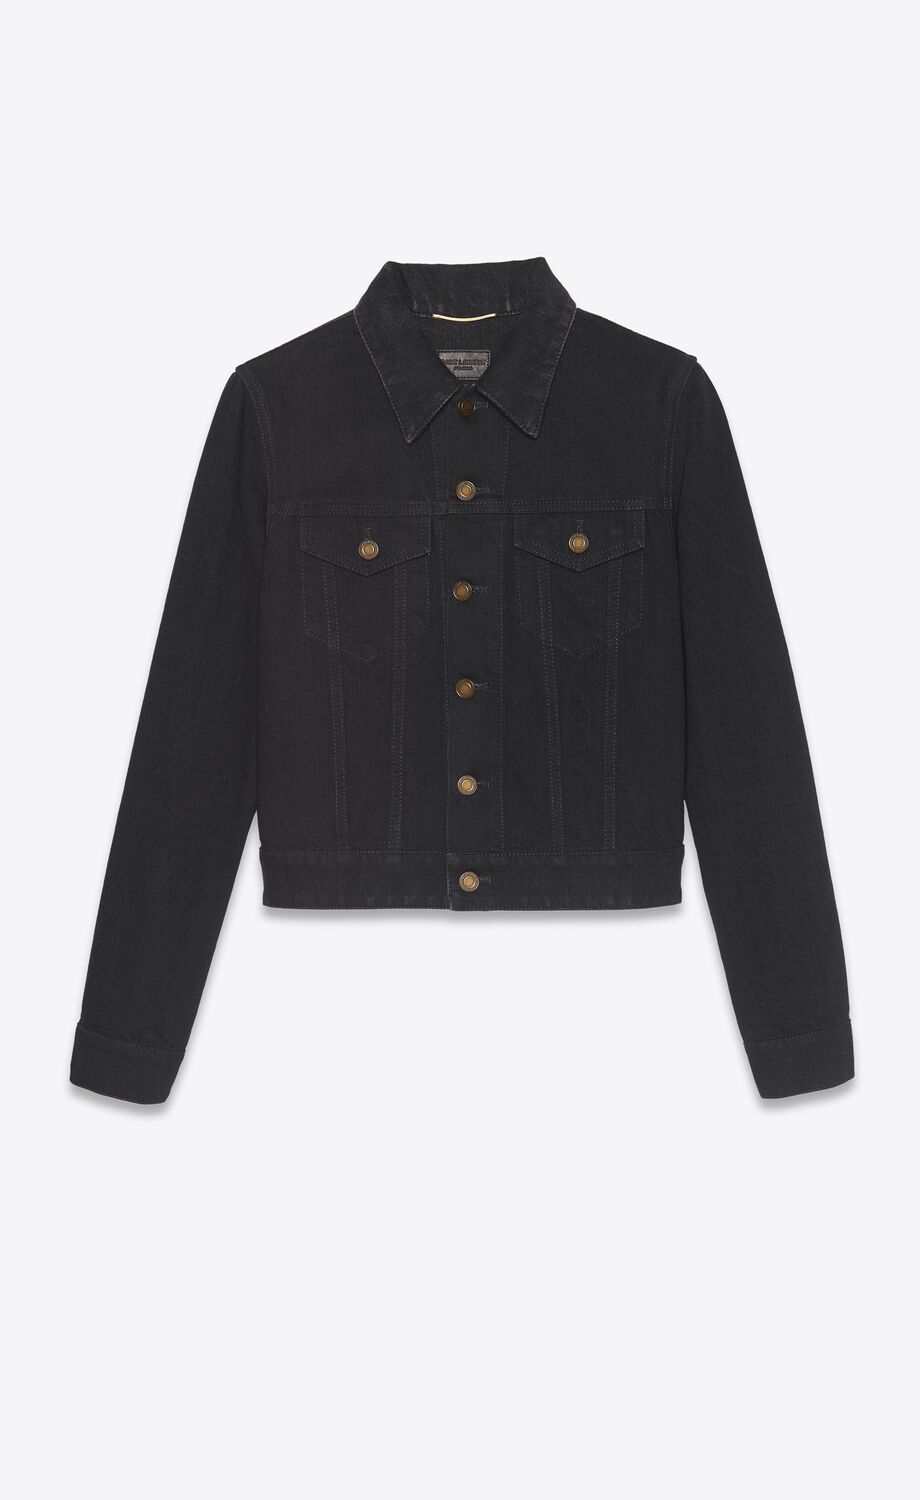 Classic jacket in worn black denim | Saint Laurent | YSL.com